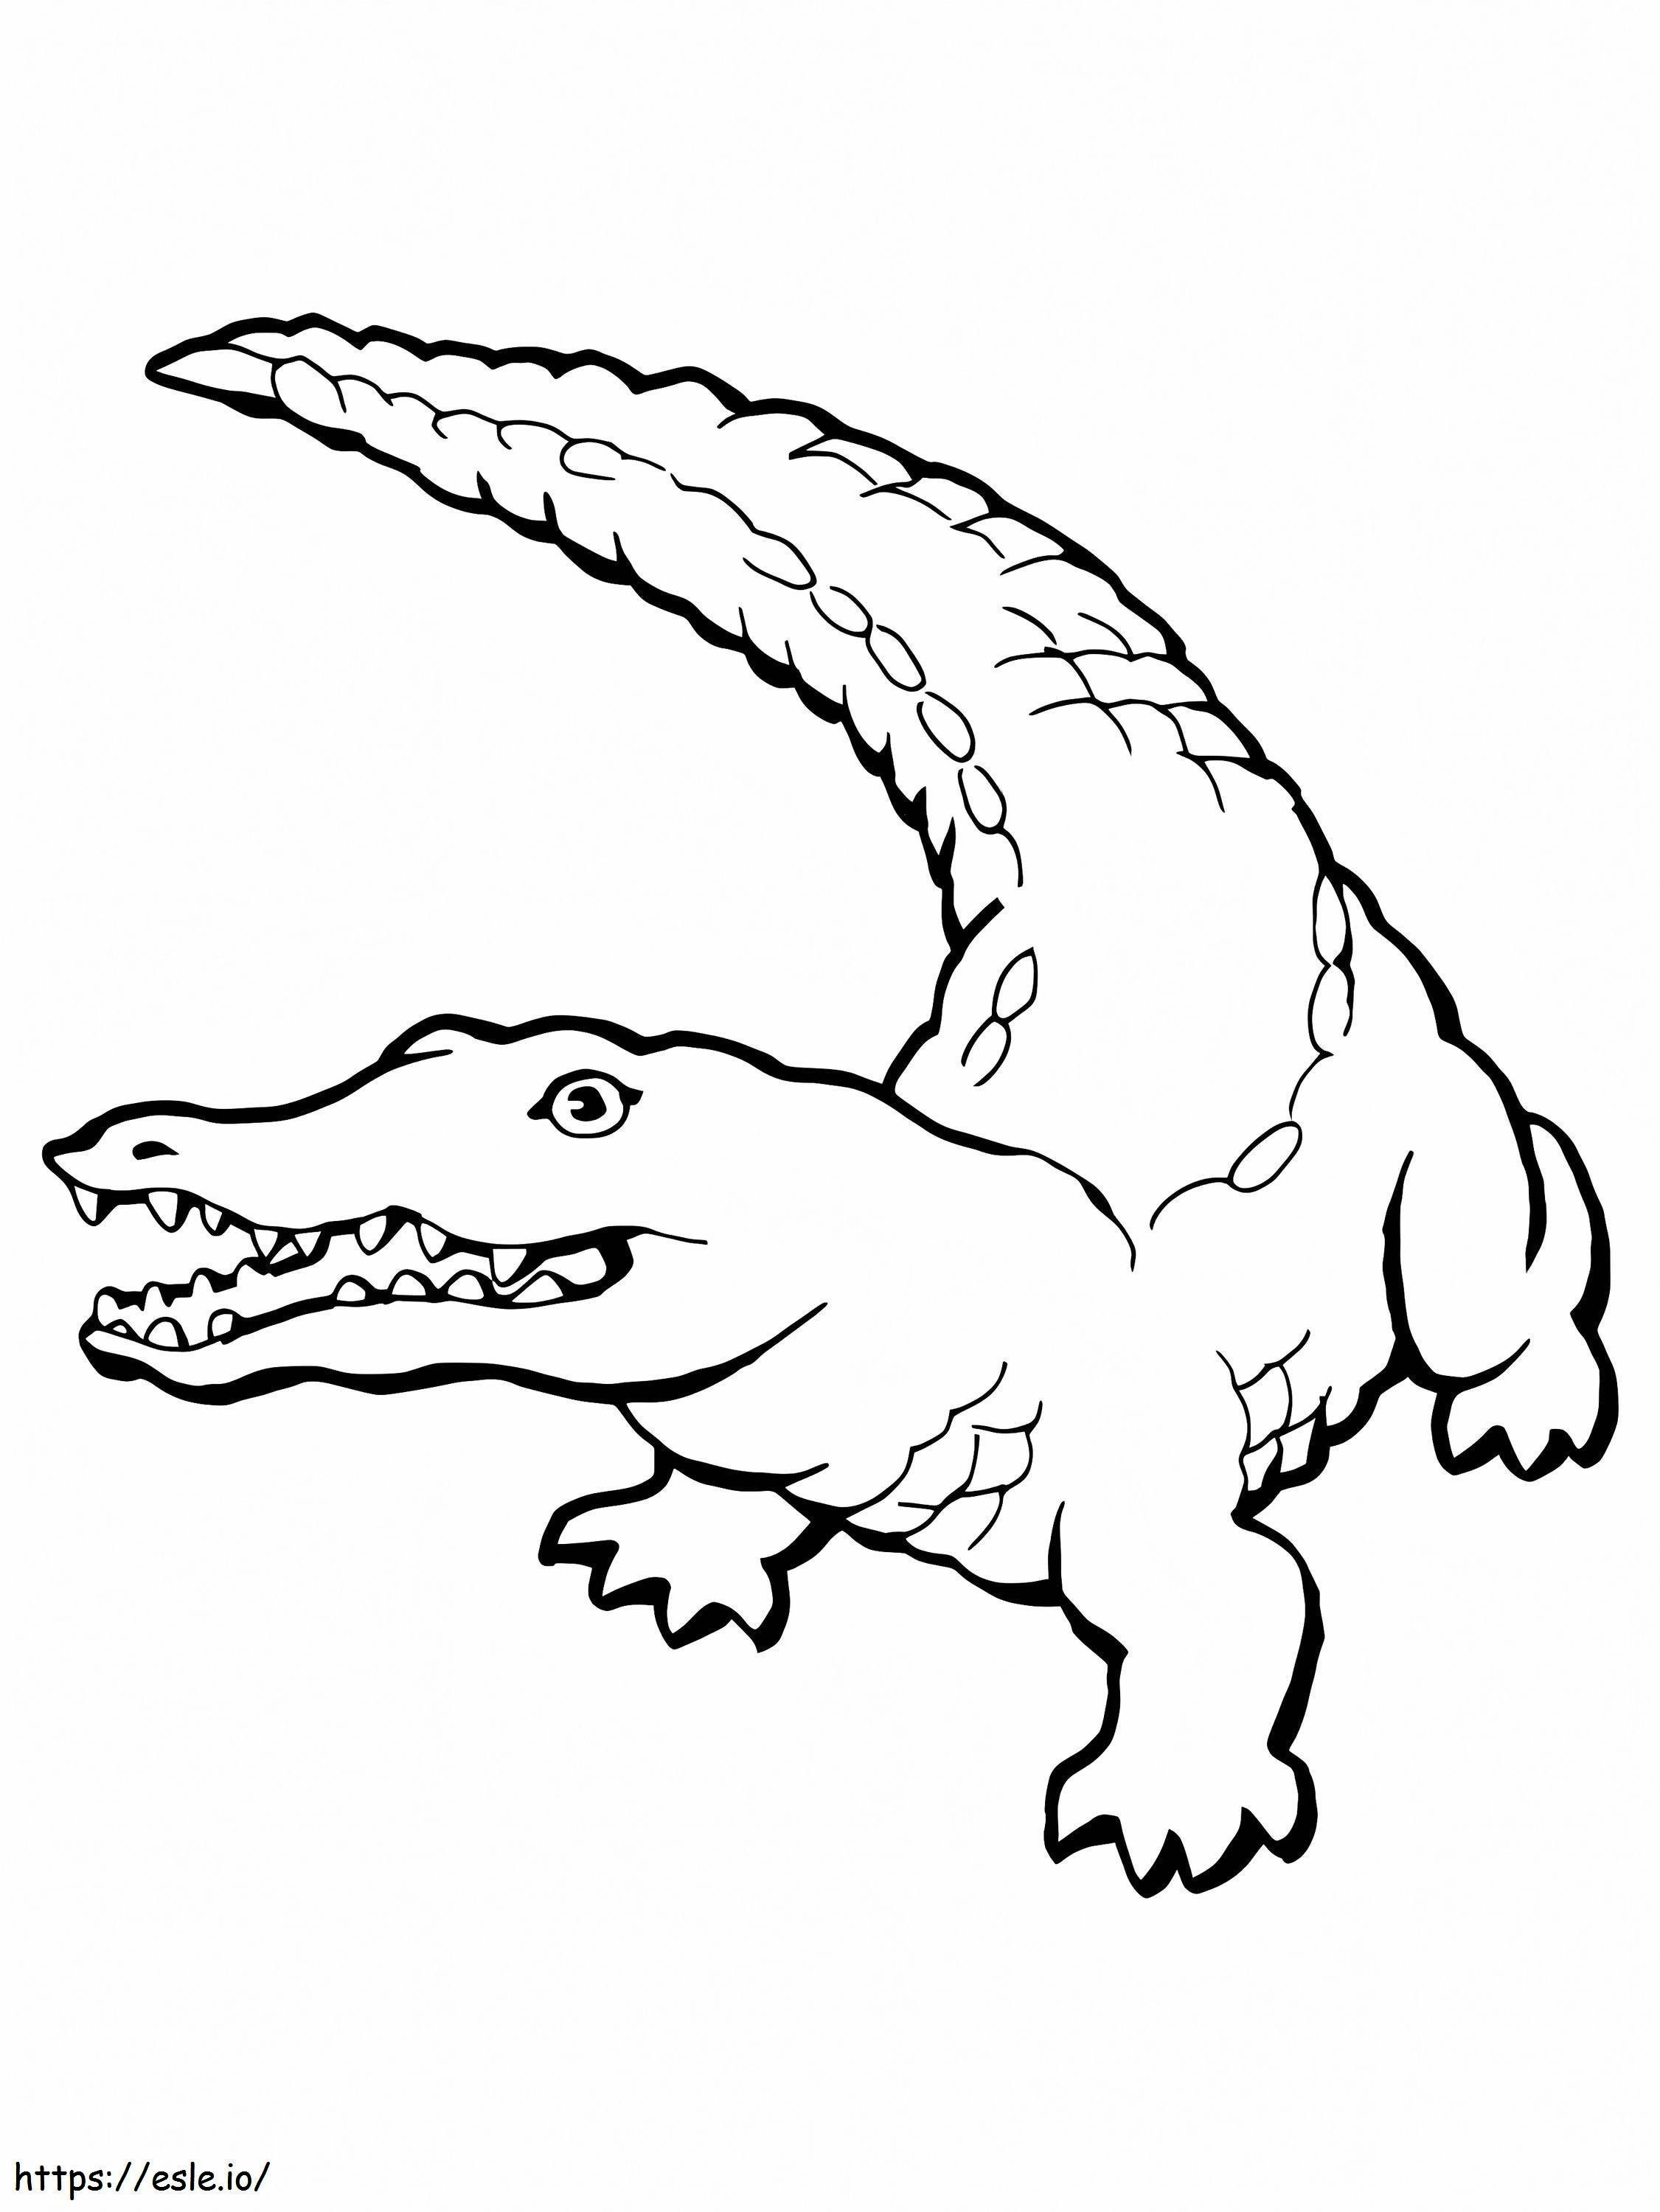 Printable Crocodile coloring page